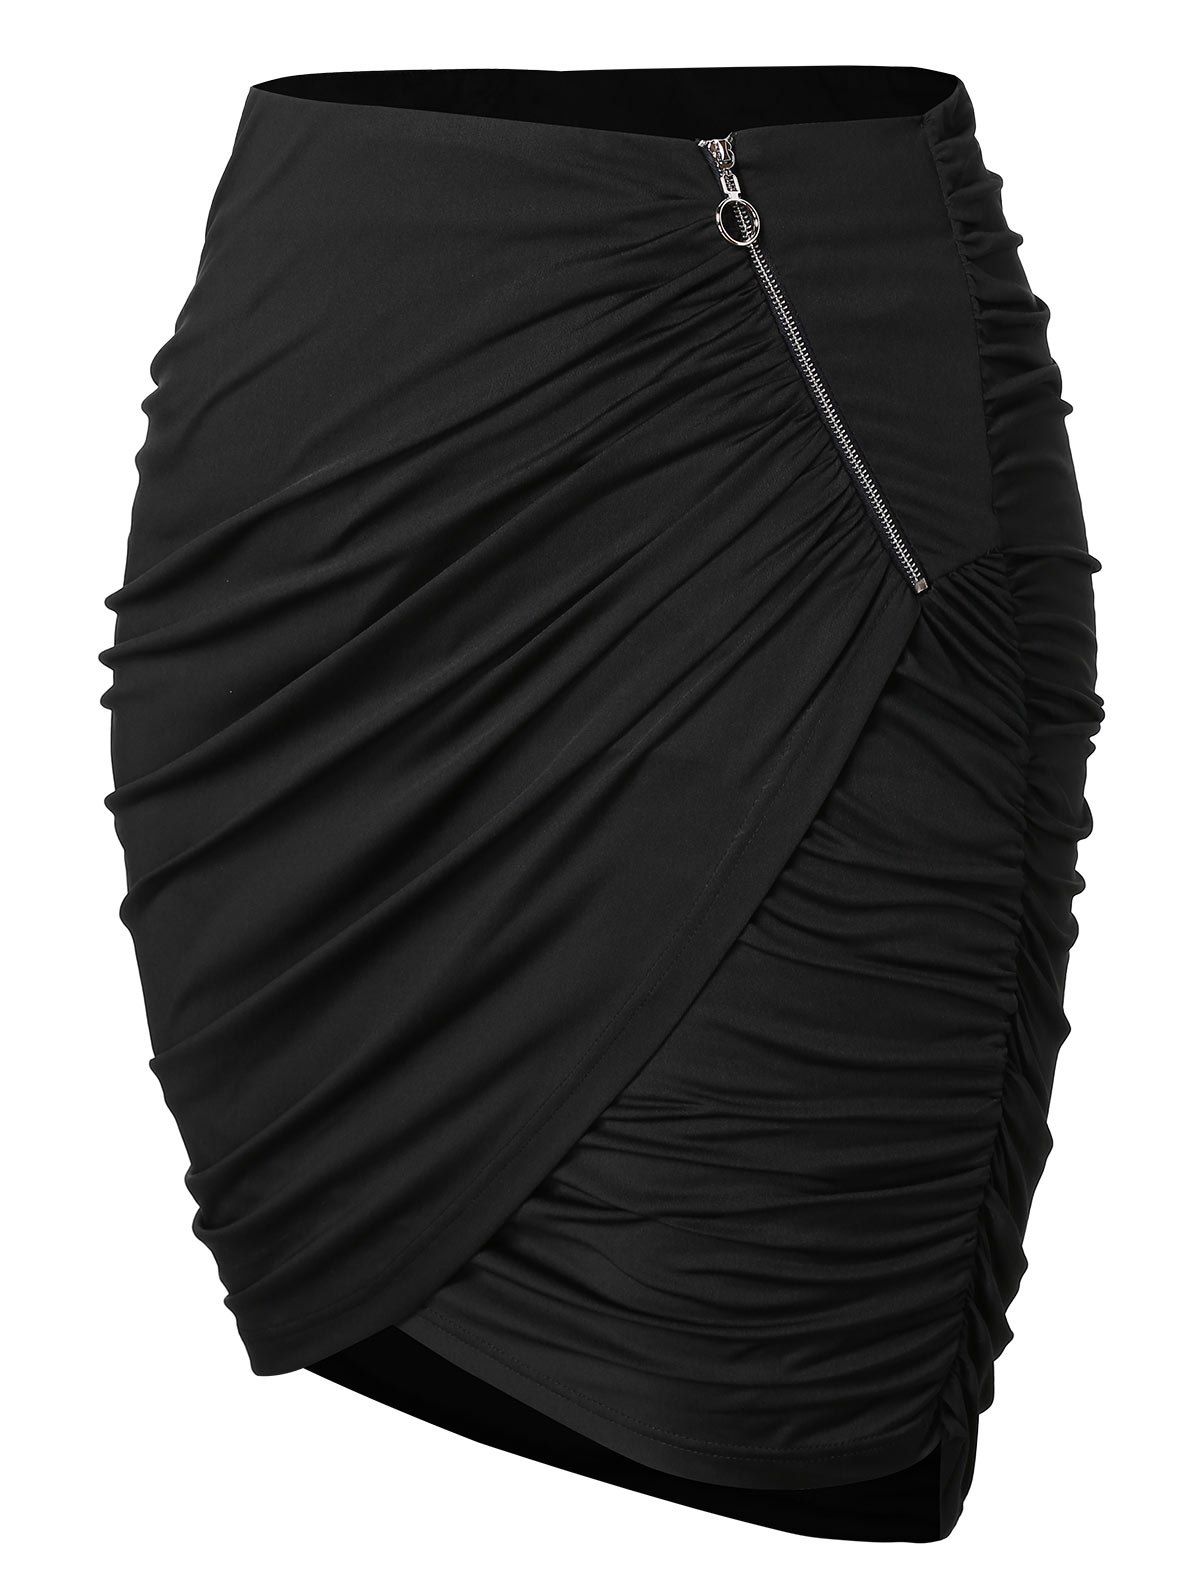 Plus Size Ruched Mini Skirt - BLACK 2X